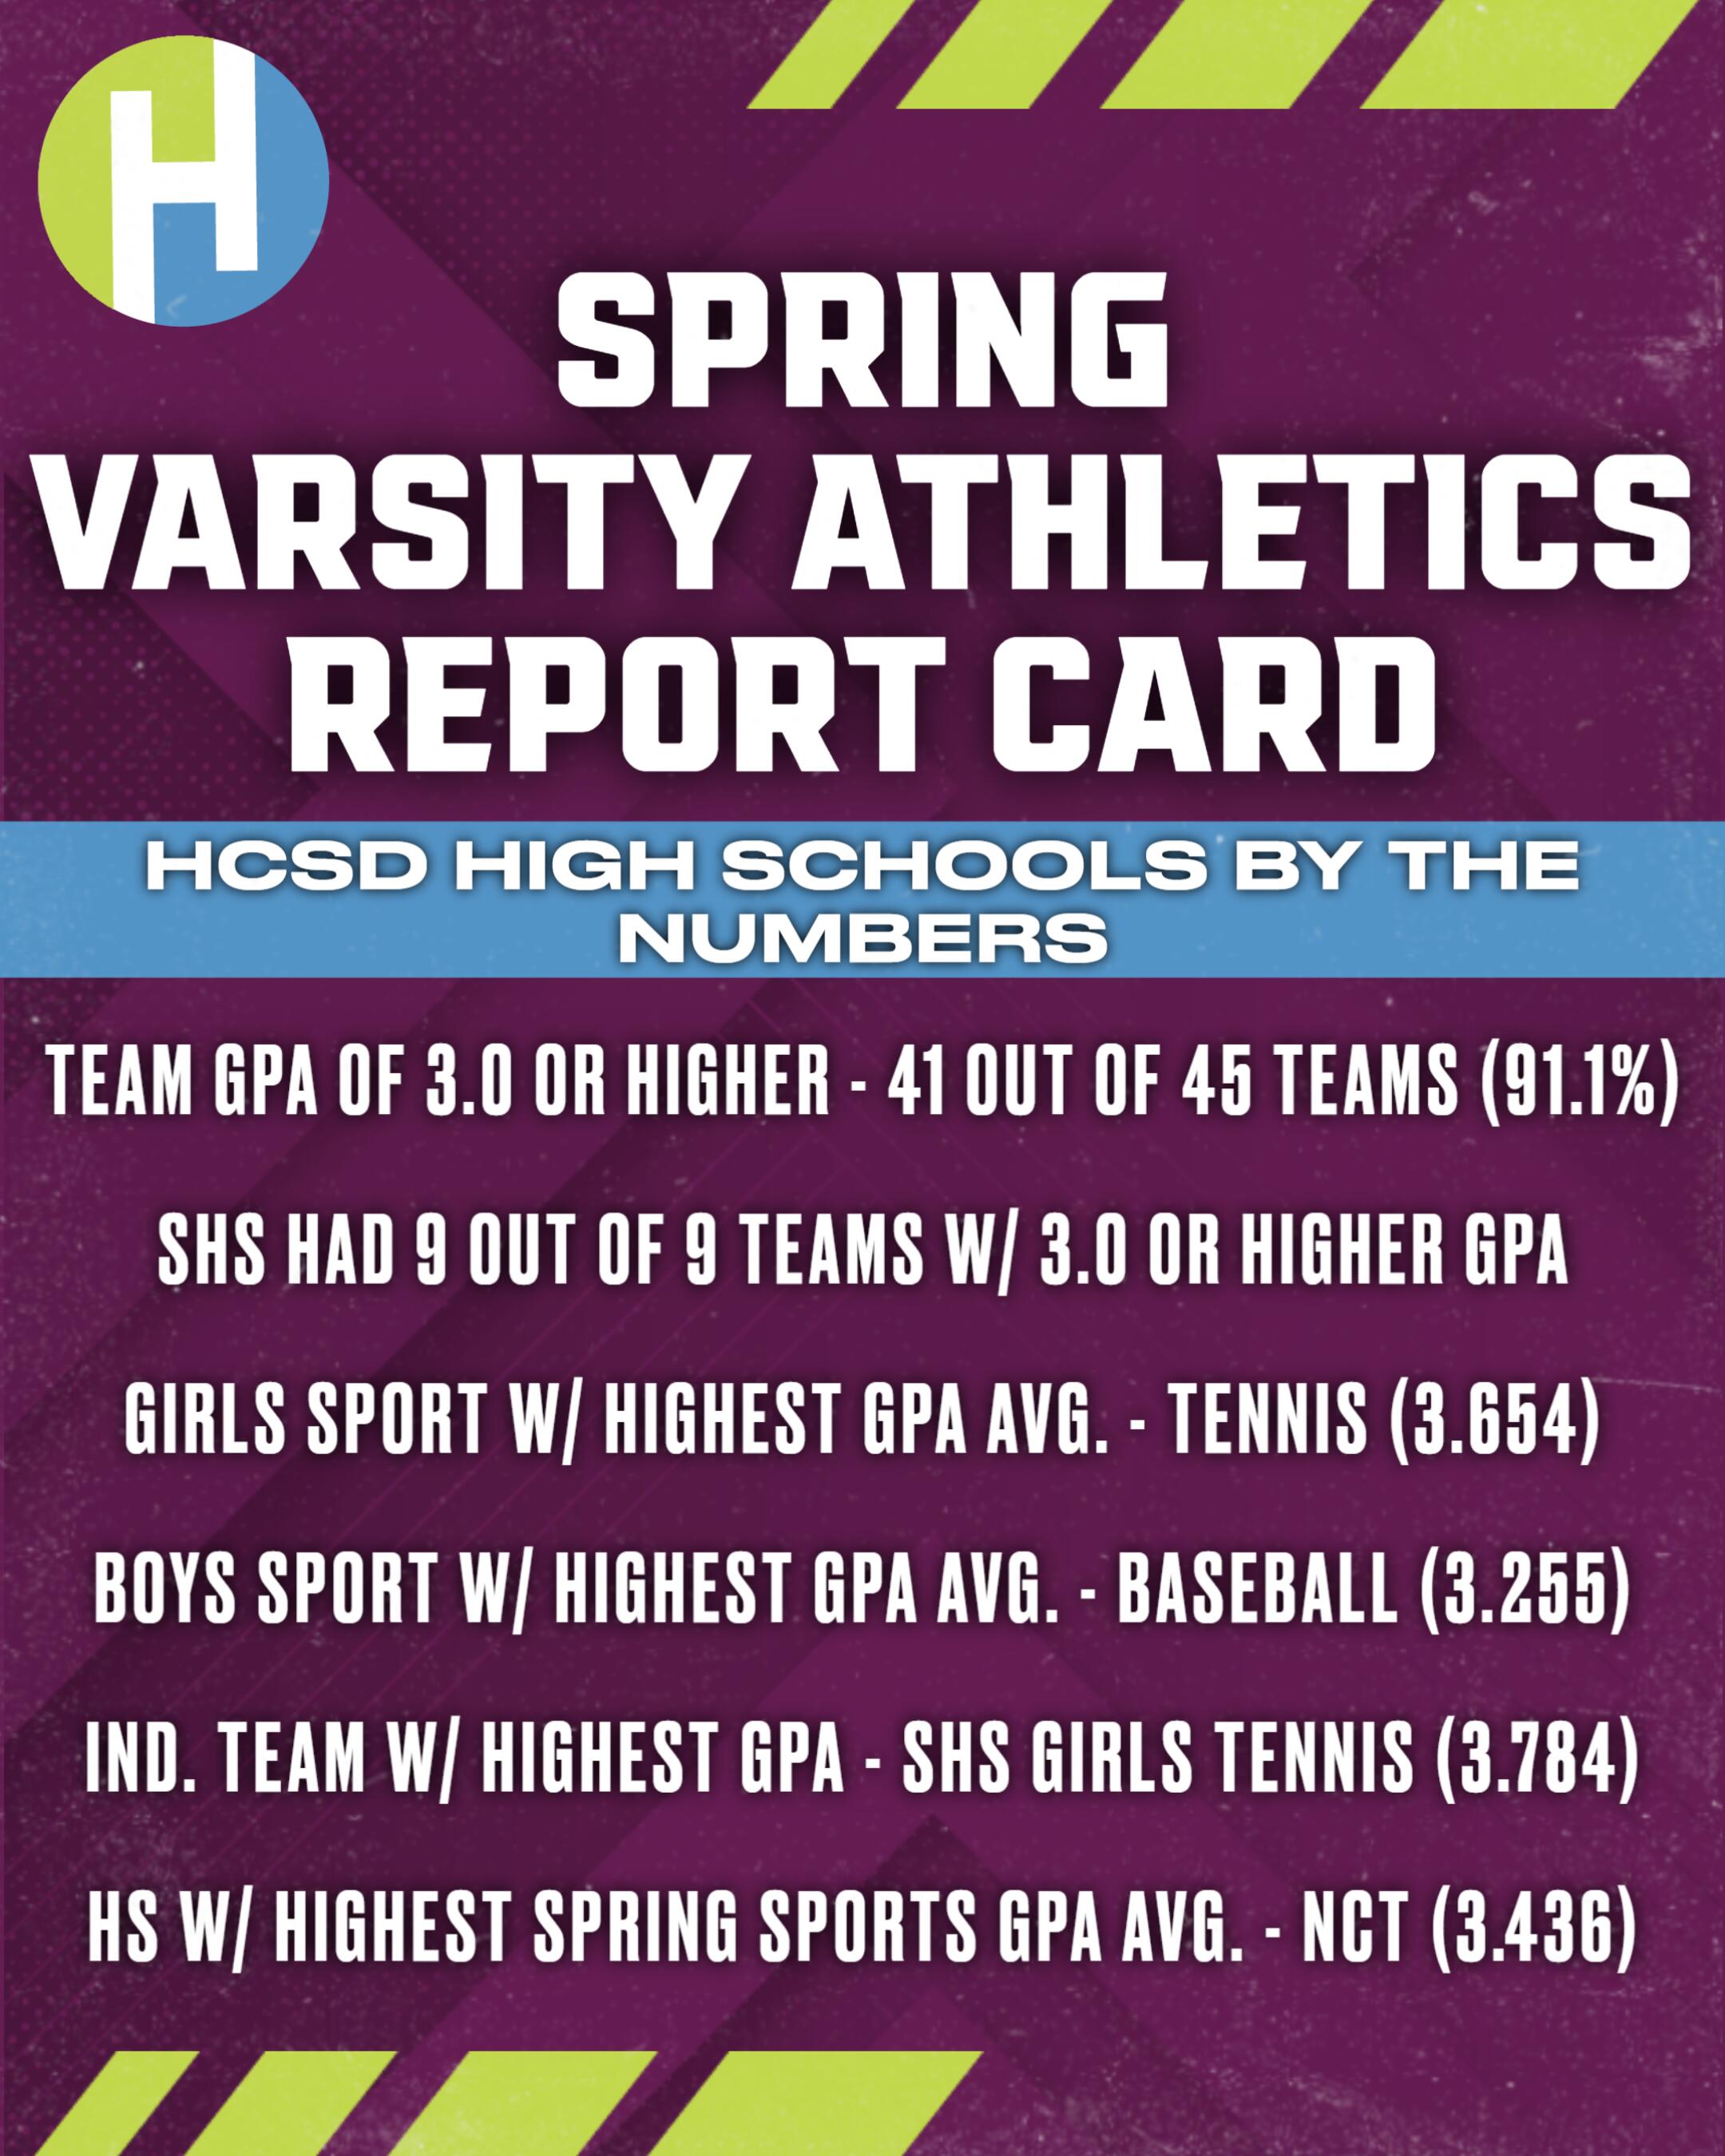 High School Winter Sports Report Card